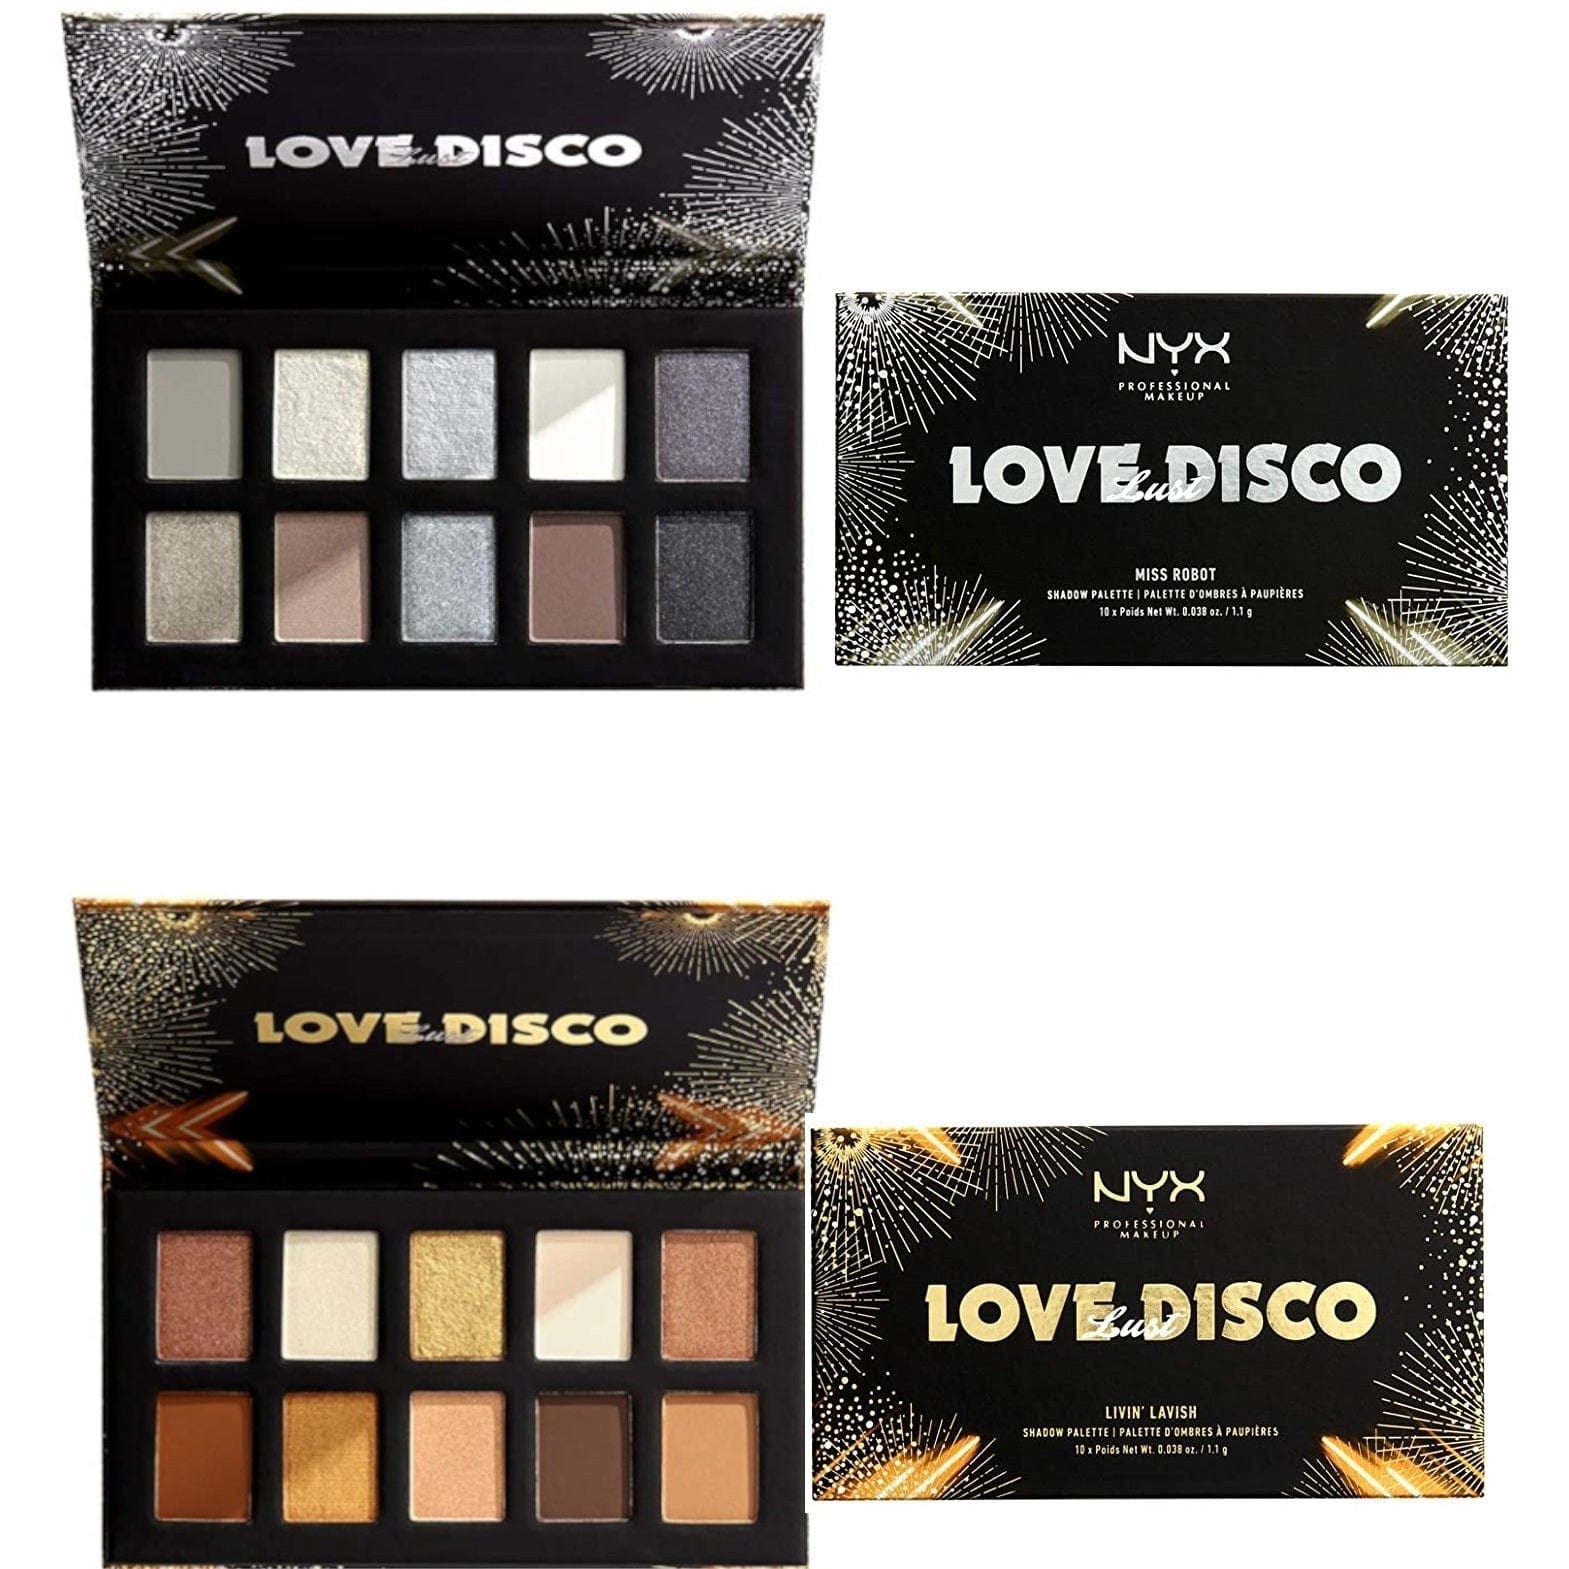 NYX Love Lust Disco Eyeshadow Palette Miss Robot & Livin Lavish - becauseyouregorgeous.com